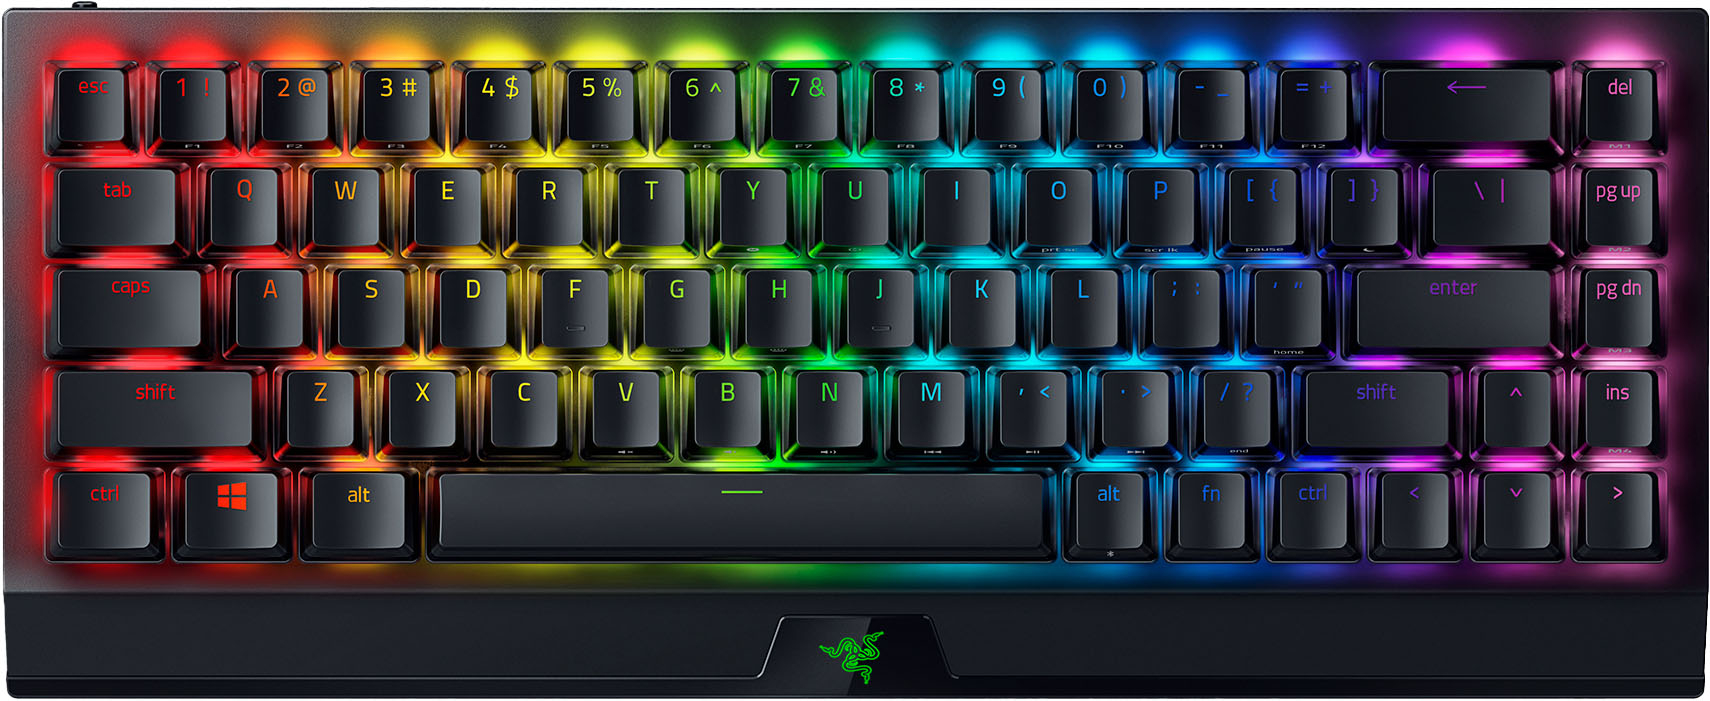 Razer BlackWidow V3 Pro Wireles Mechanical Gaming Keyboard - Black, Green  Switches for sale online